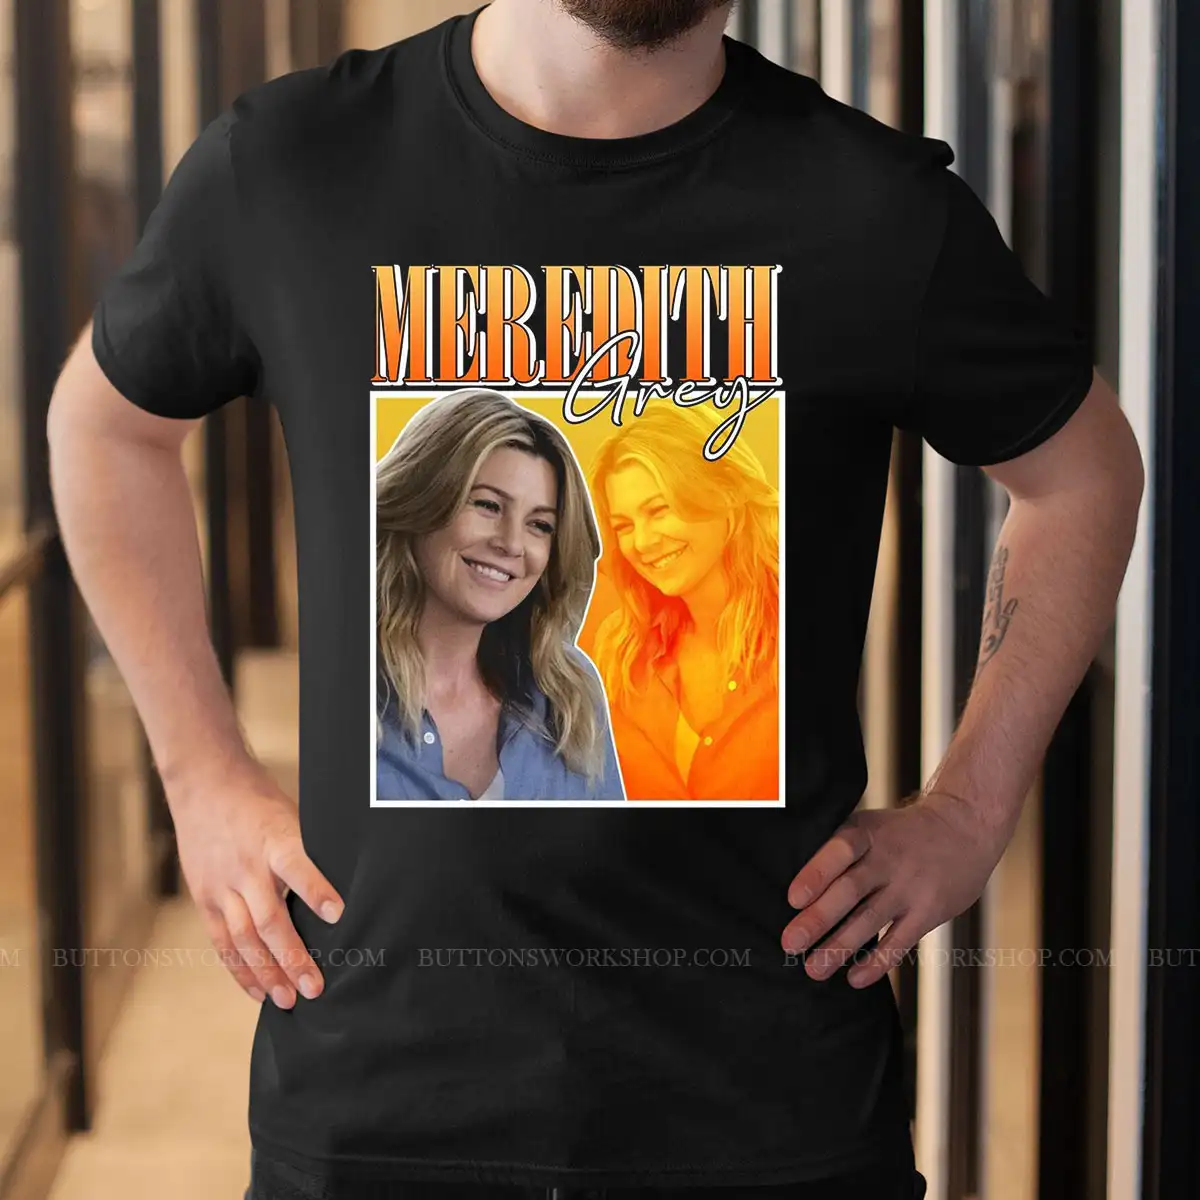 Meredith Grey Shirt Unisex Tshirt